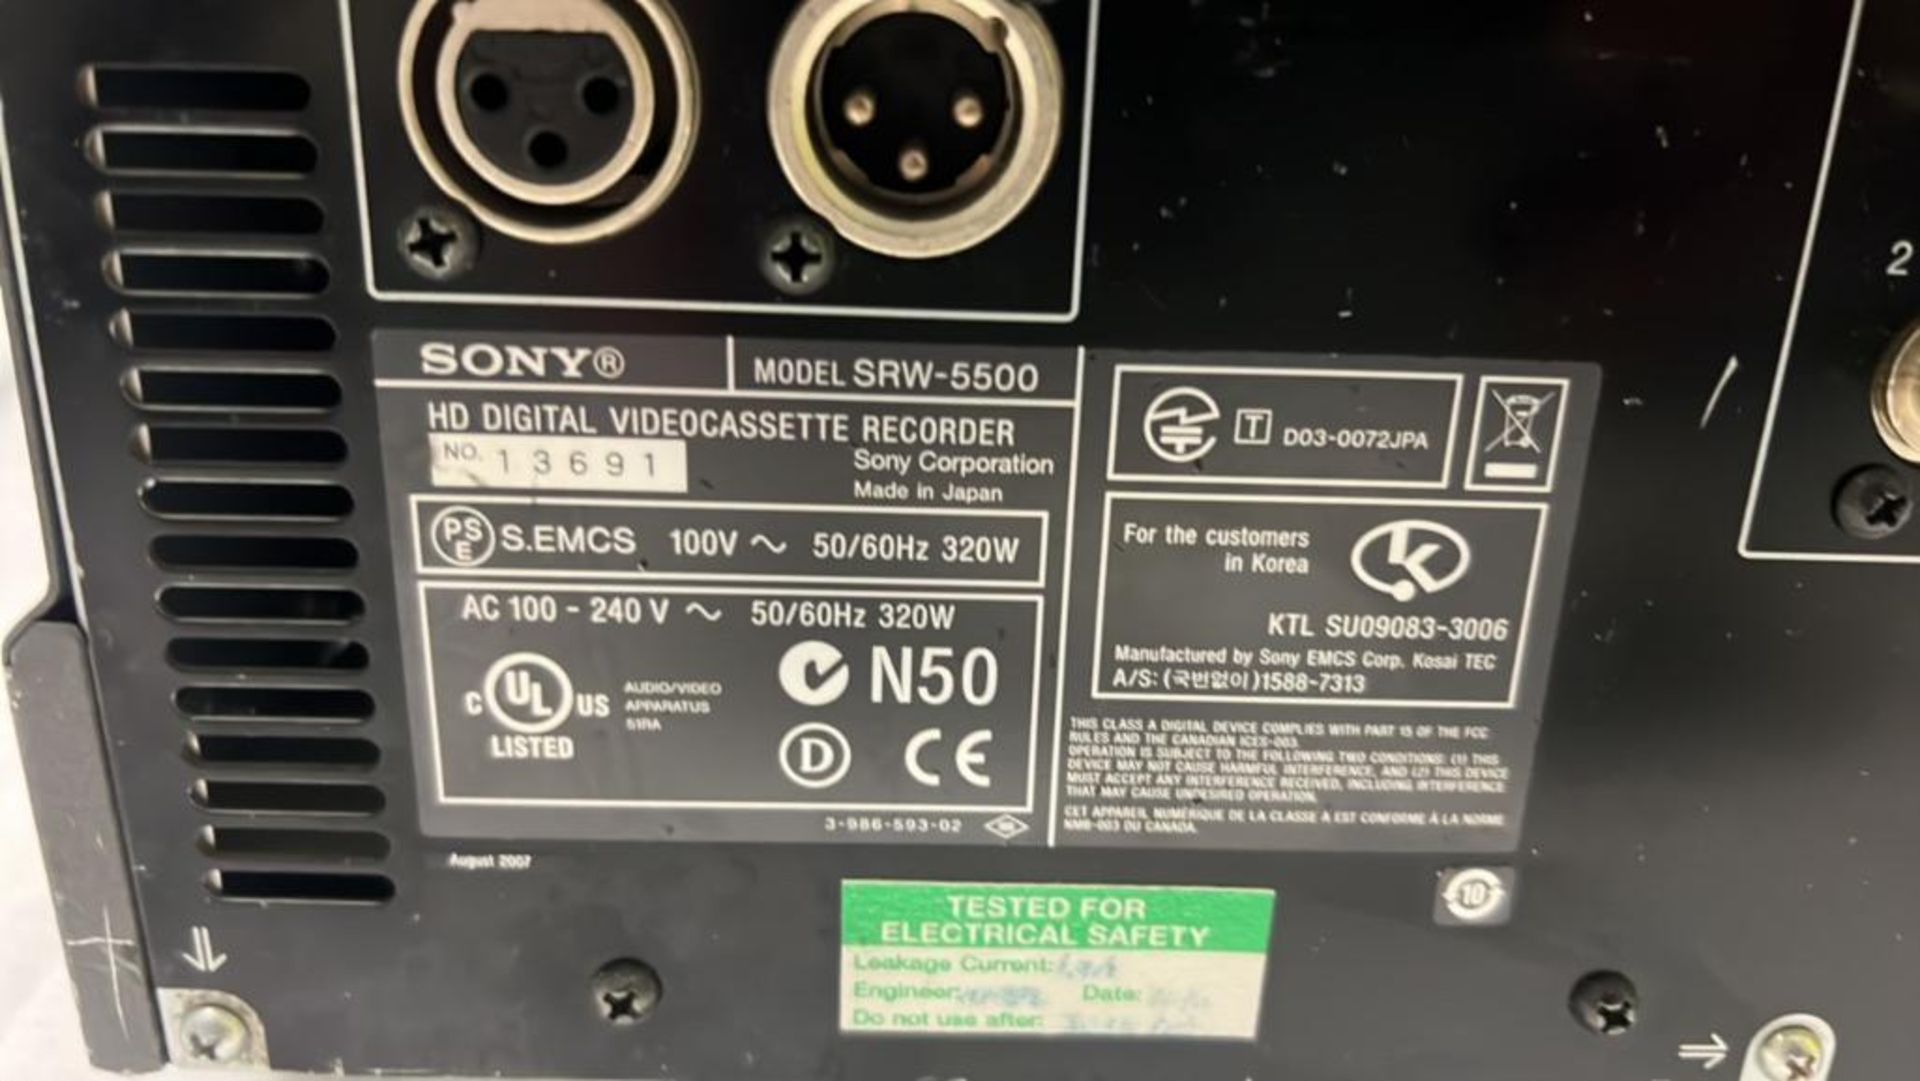 Sony SRW-5800 HDCAM Broadcast Digital Video Recorder No flight case SN: 13691 - Image 3 of 3